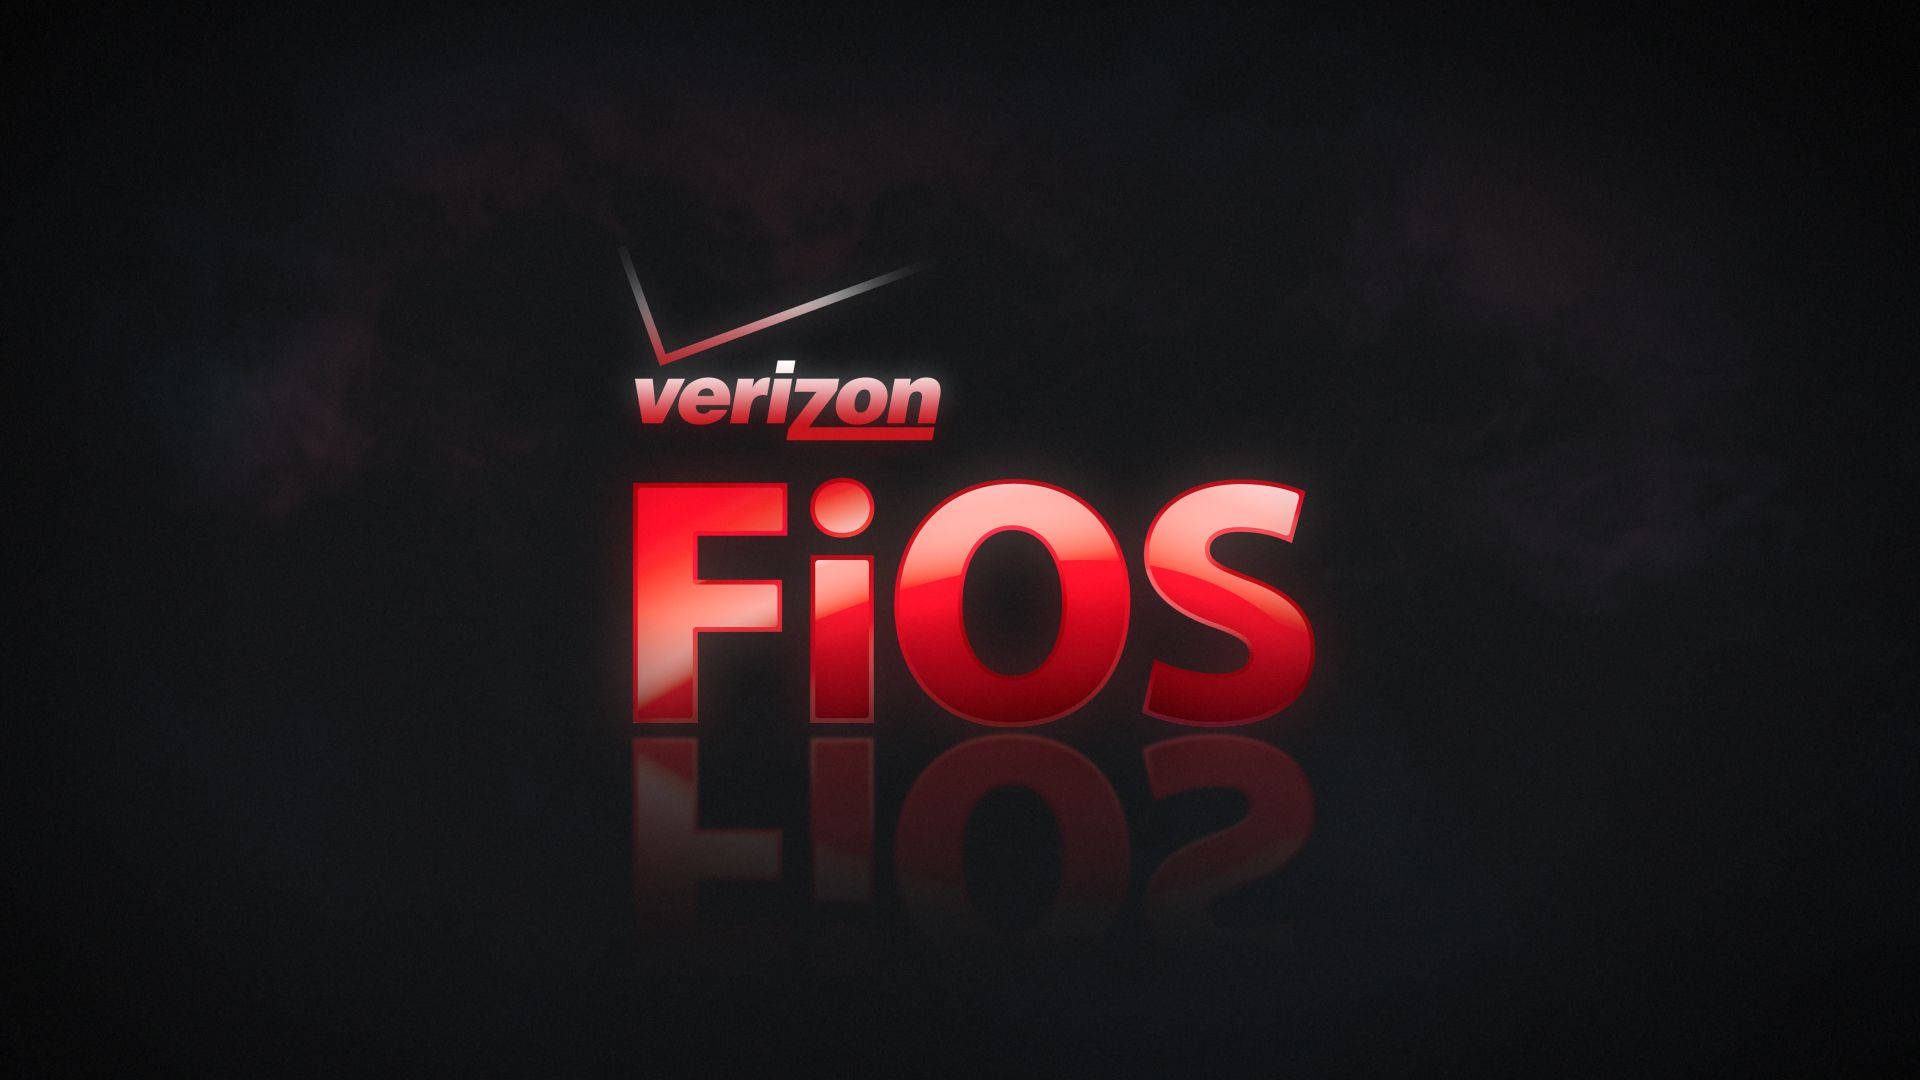 Verizon Fios Red Logo Wallpaper